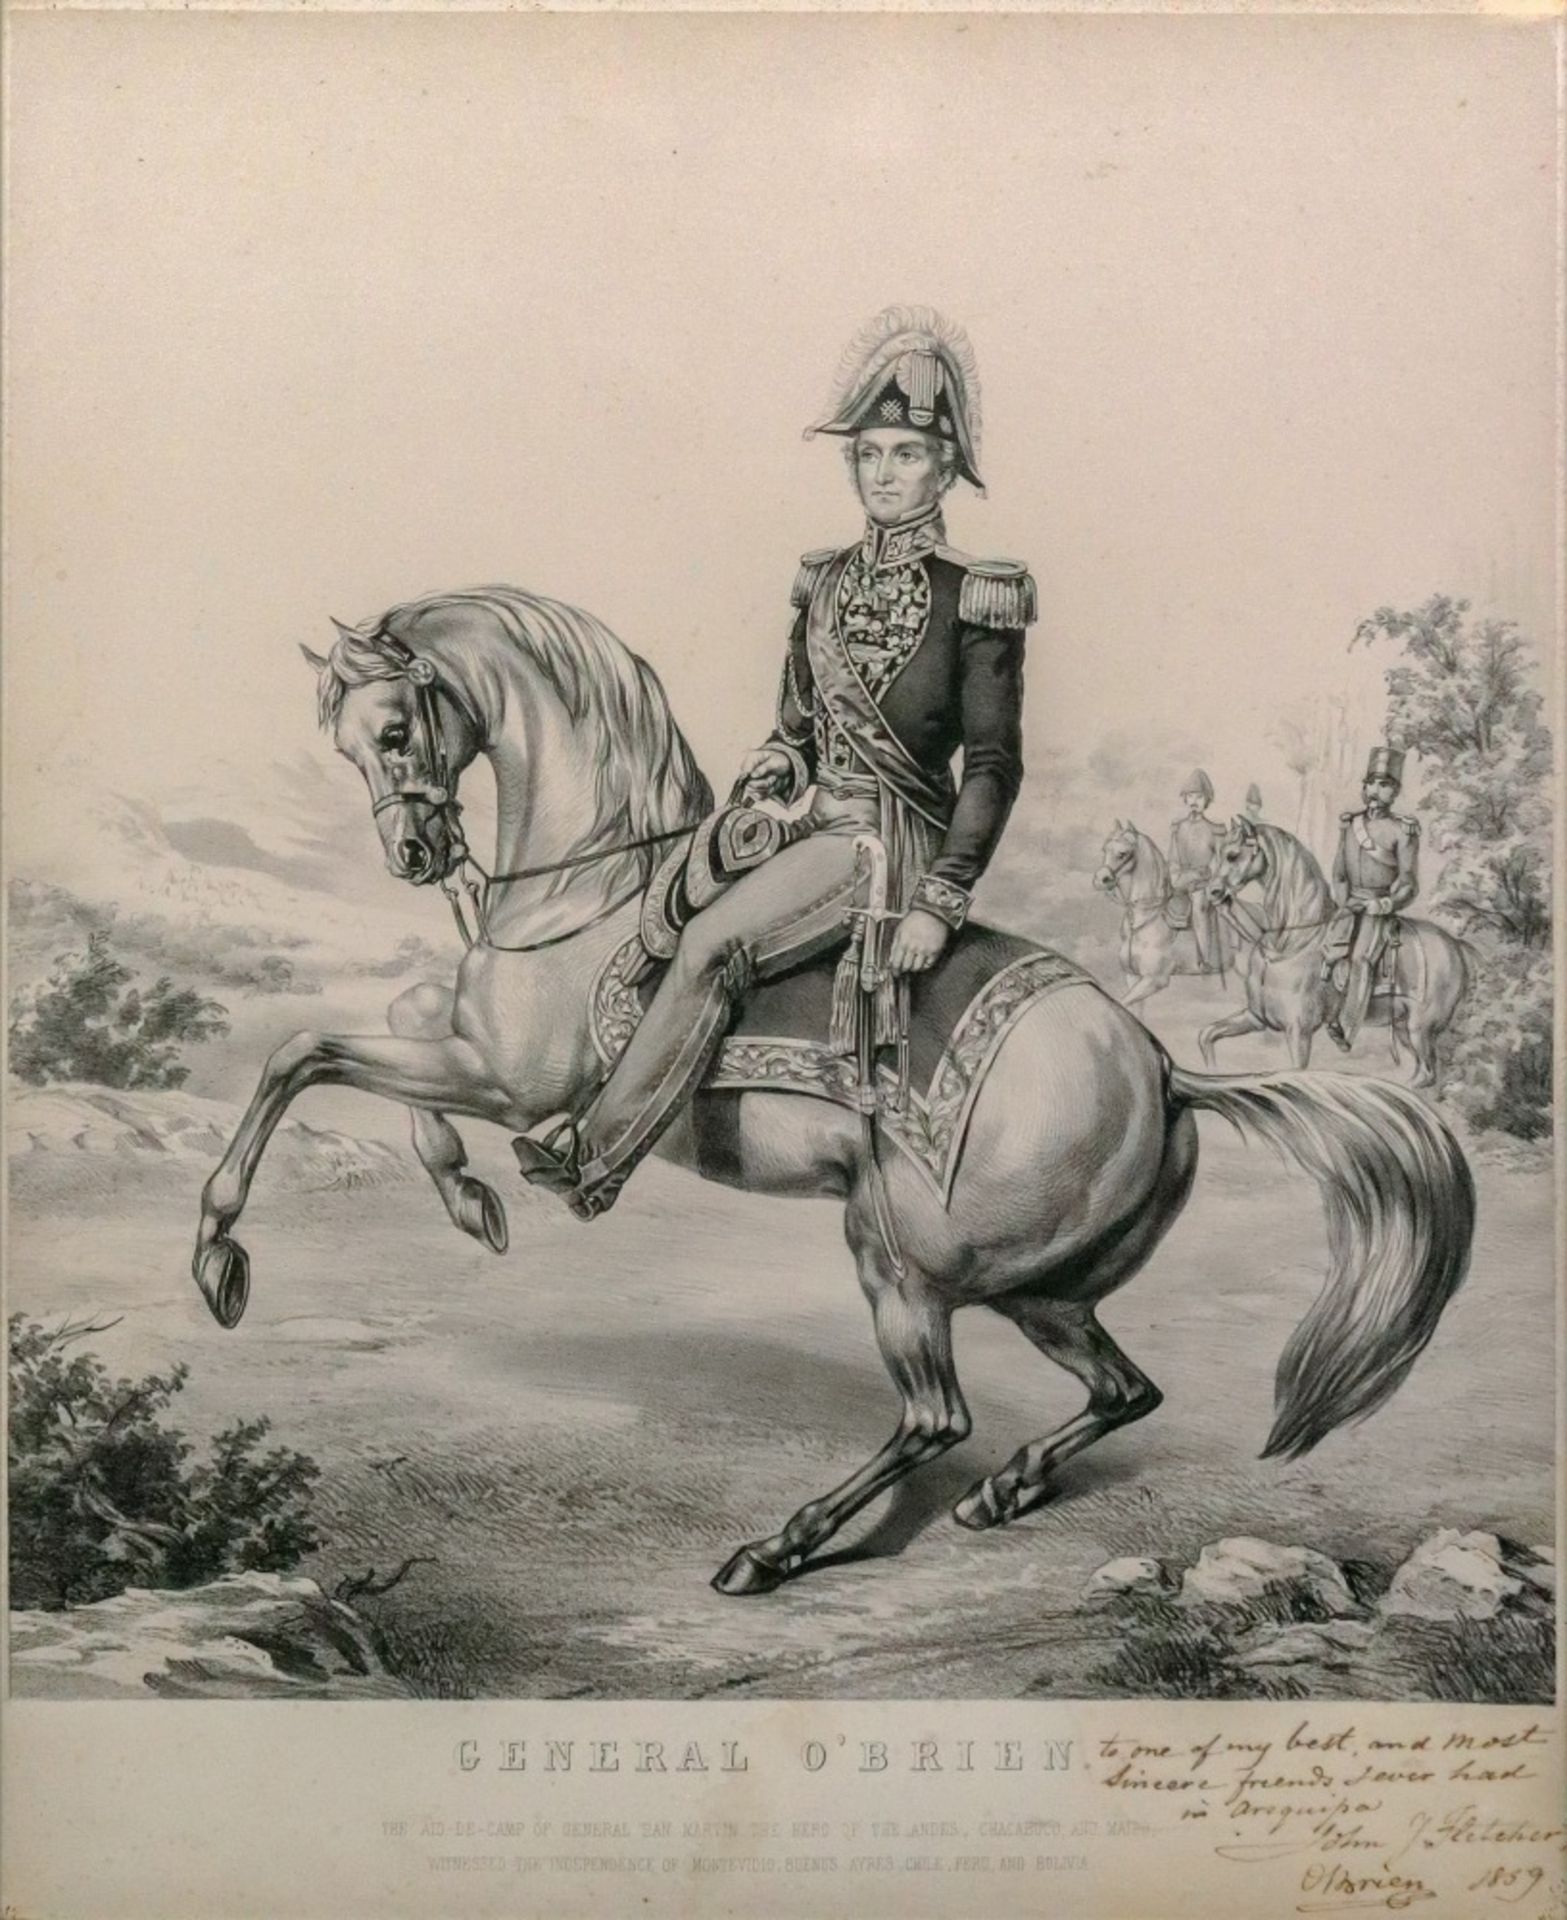 A print of General O'Brien on horseback,